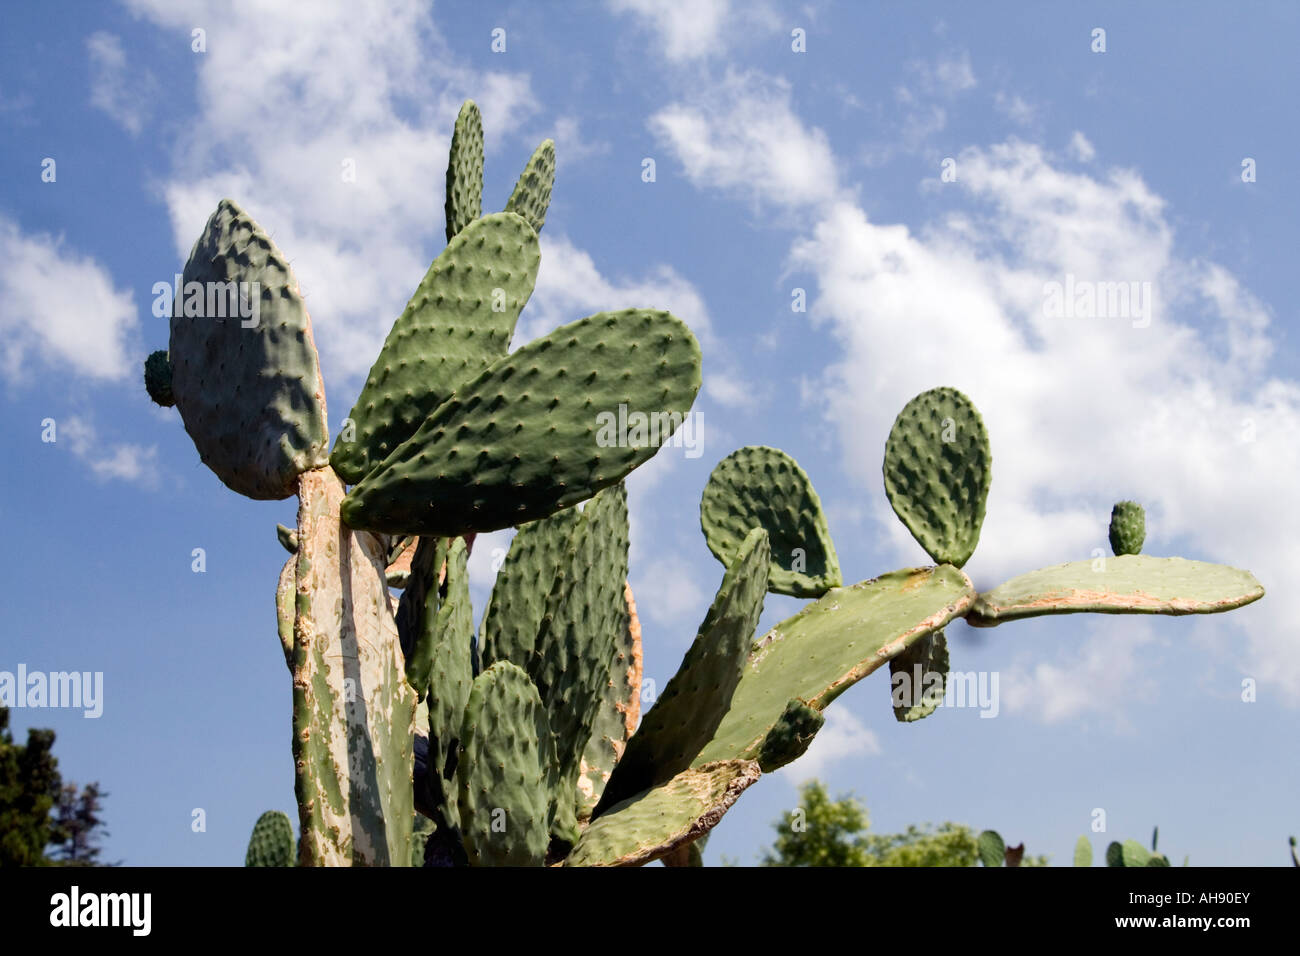 Detail Of Cactus Opuntia Tomentosa In Allah's Garden In The Botanical Gardens In Balchik In Bulgaria Stock Photo